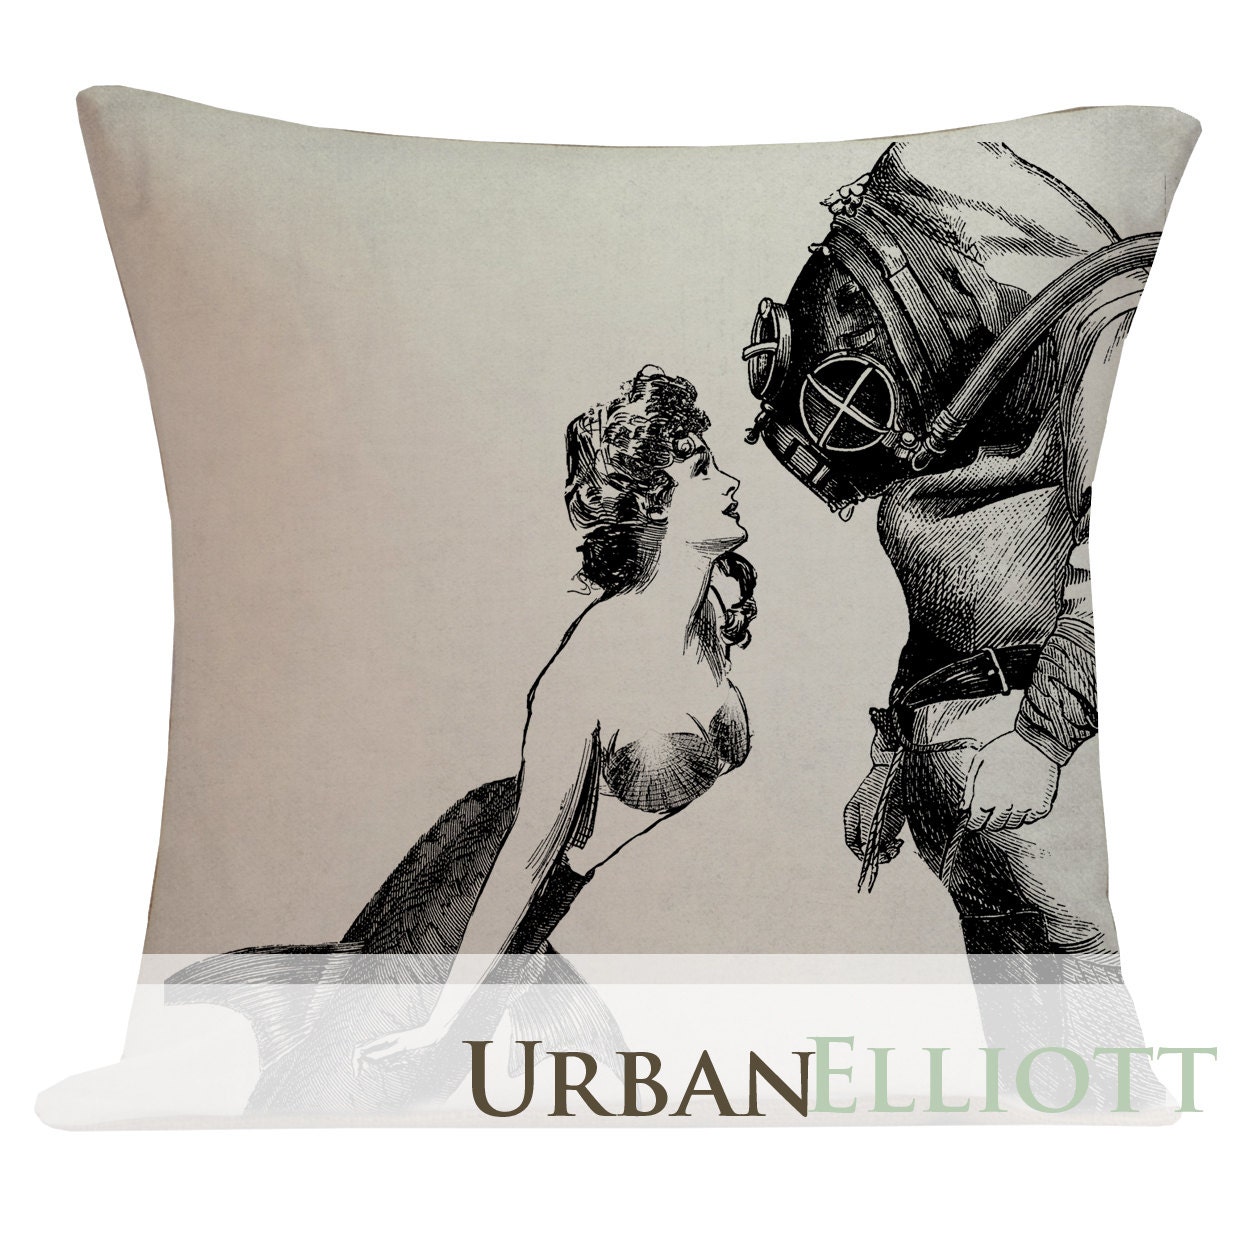 Steampunk Pillow Cover Cotton Canvas Throw Pillow 18 inch square Victorian Mermaid meets Scuba Diver - UrbanElliott